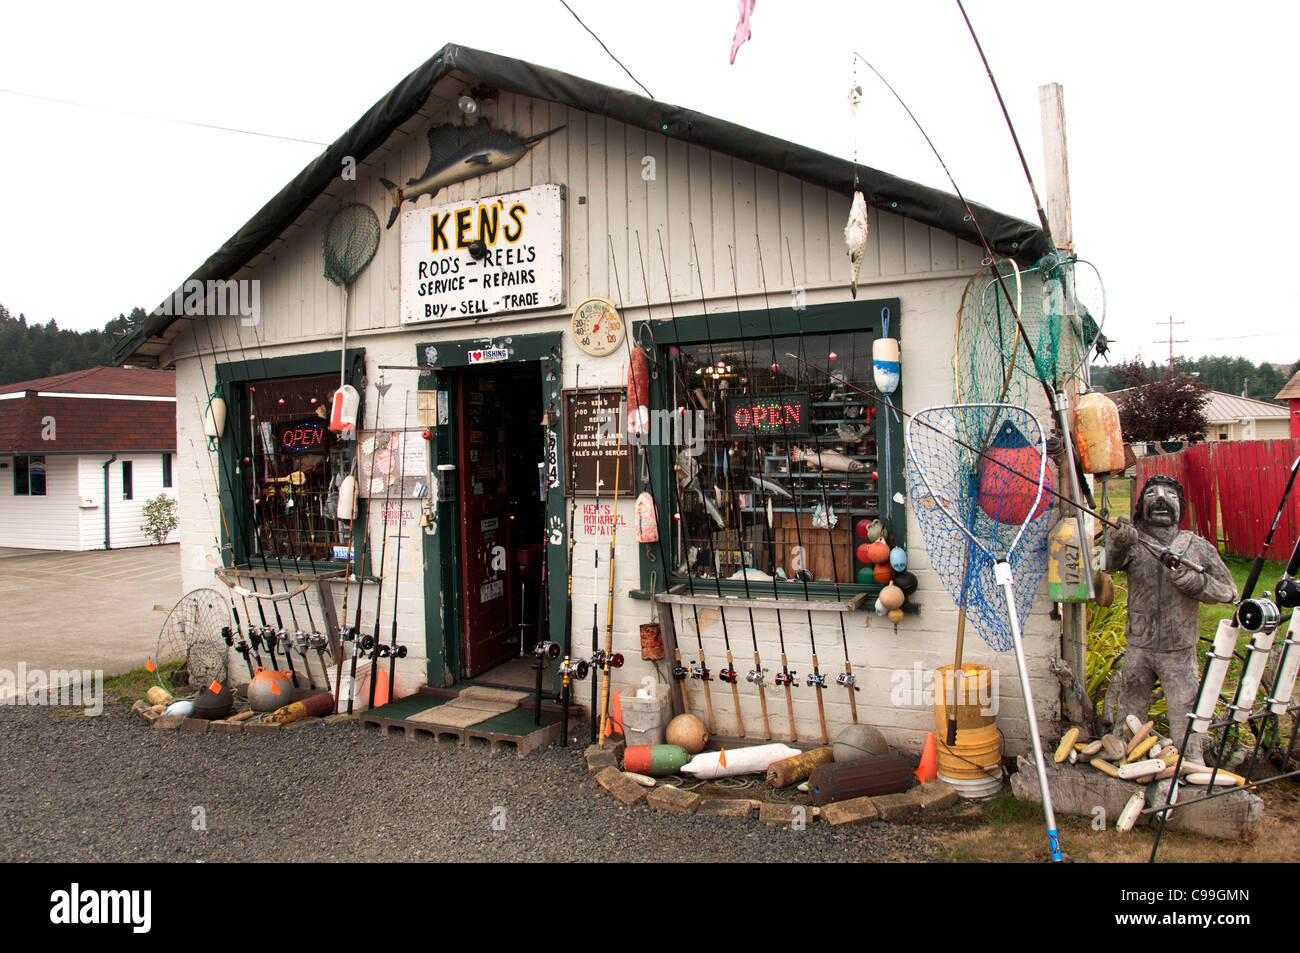 Ken's Rod's Reel,s Fish and Tackle shop Reedsport Oregon United States  Fishing Fish angling angler fisherman Stock Photo - Alamy